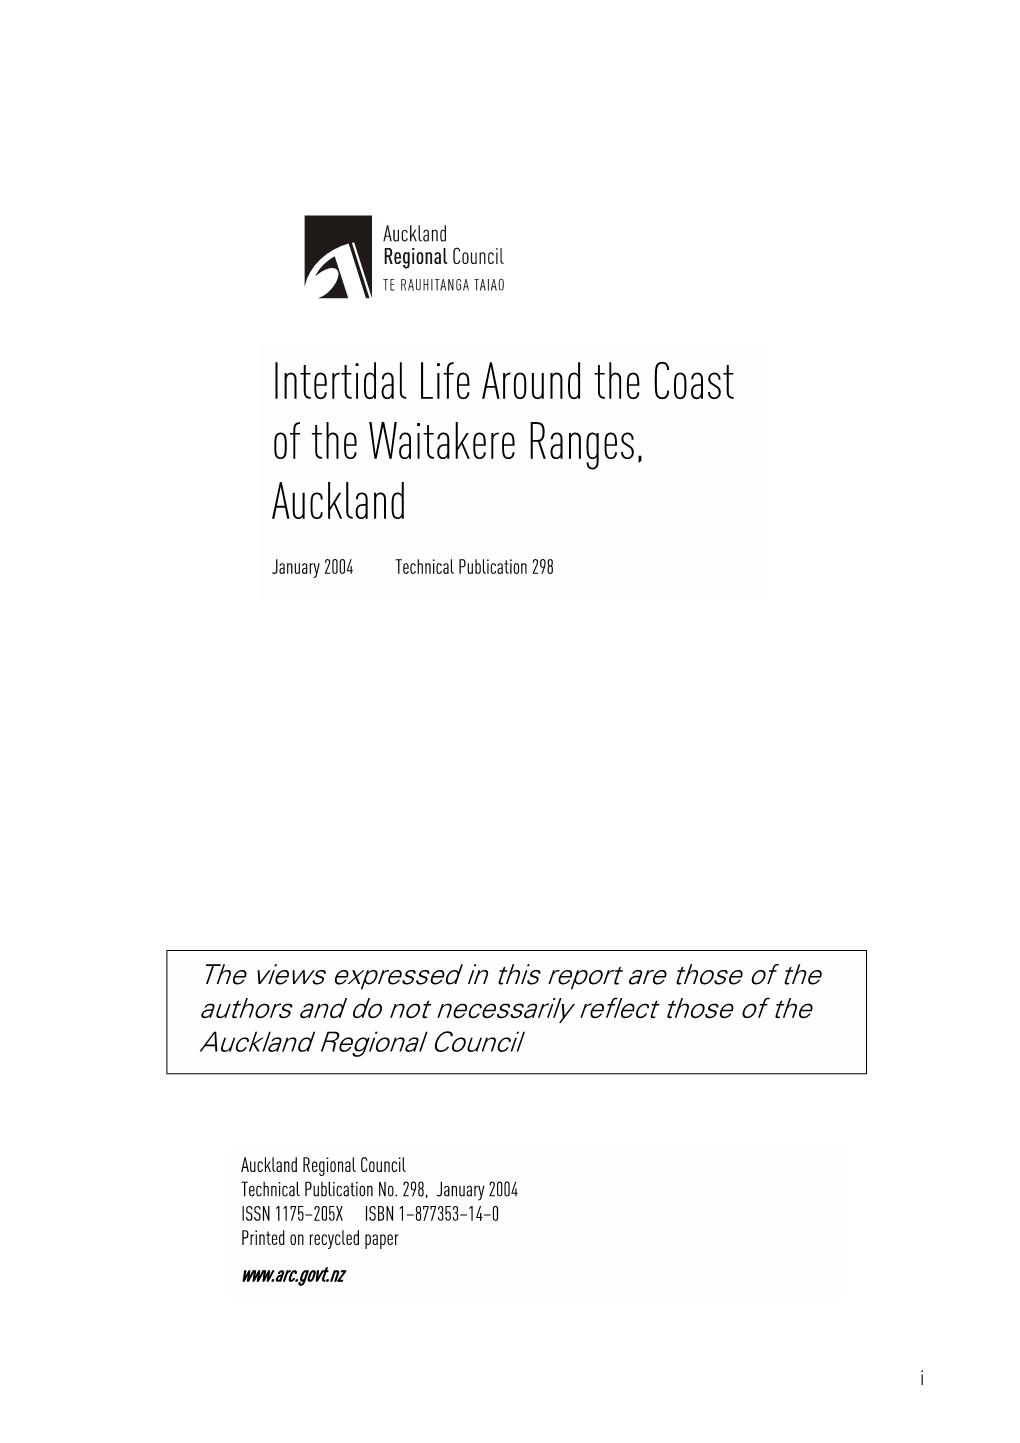 Intertidal Life Around the Waitakere Ranges